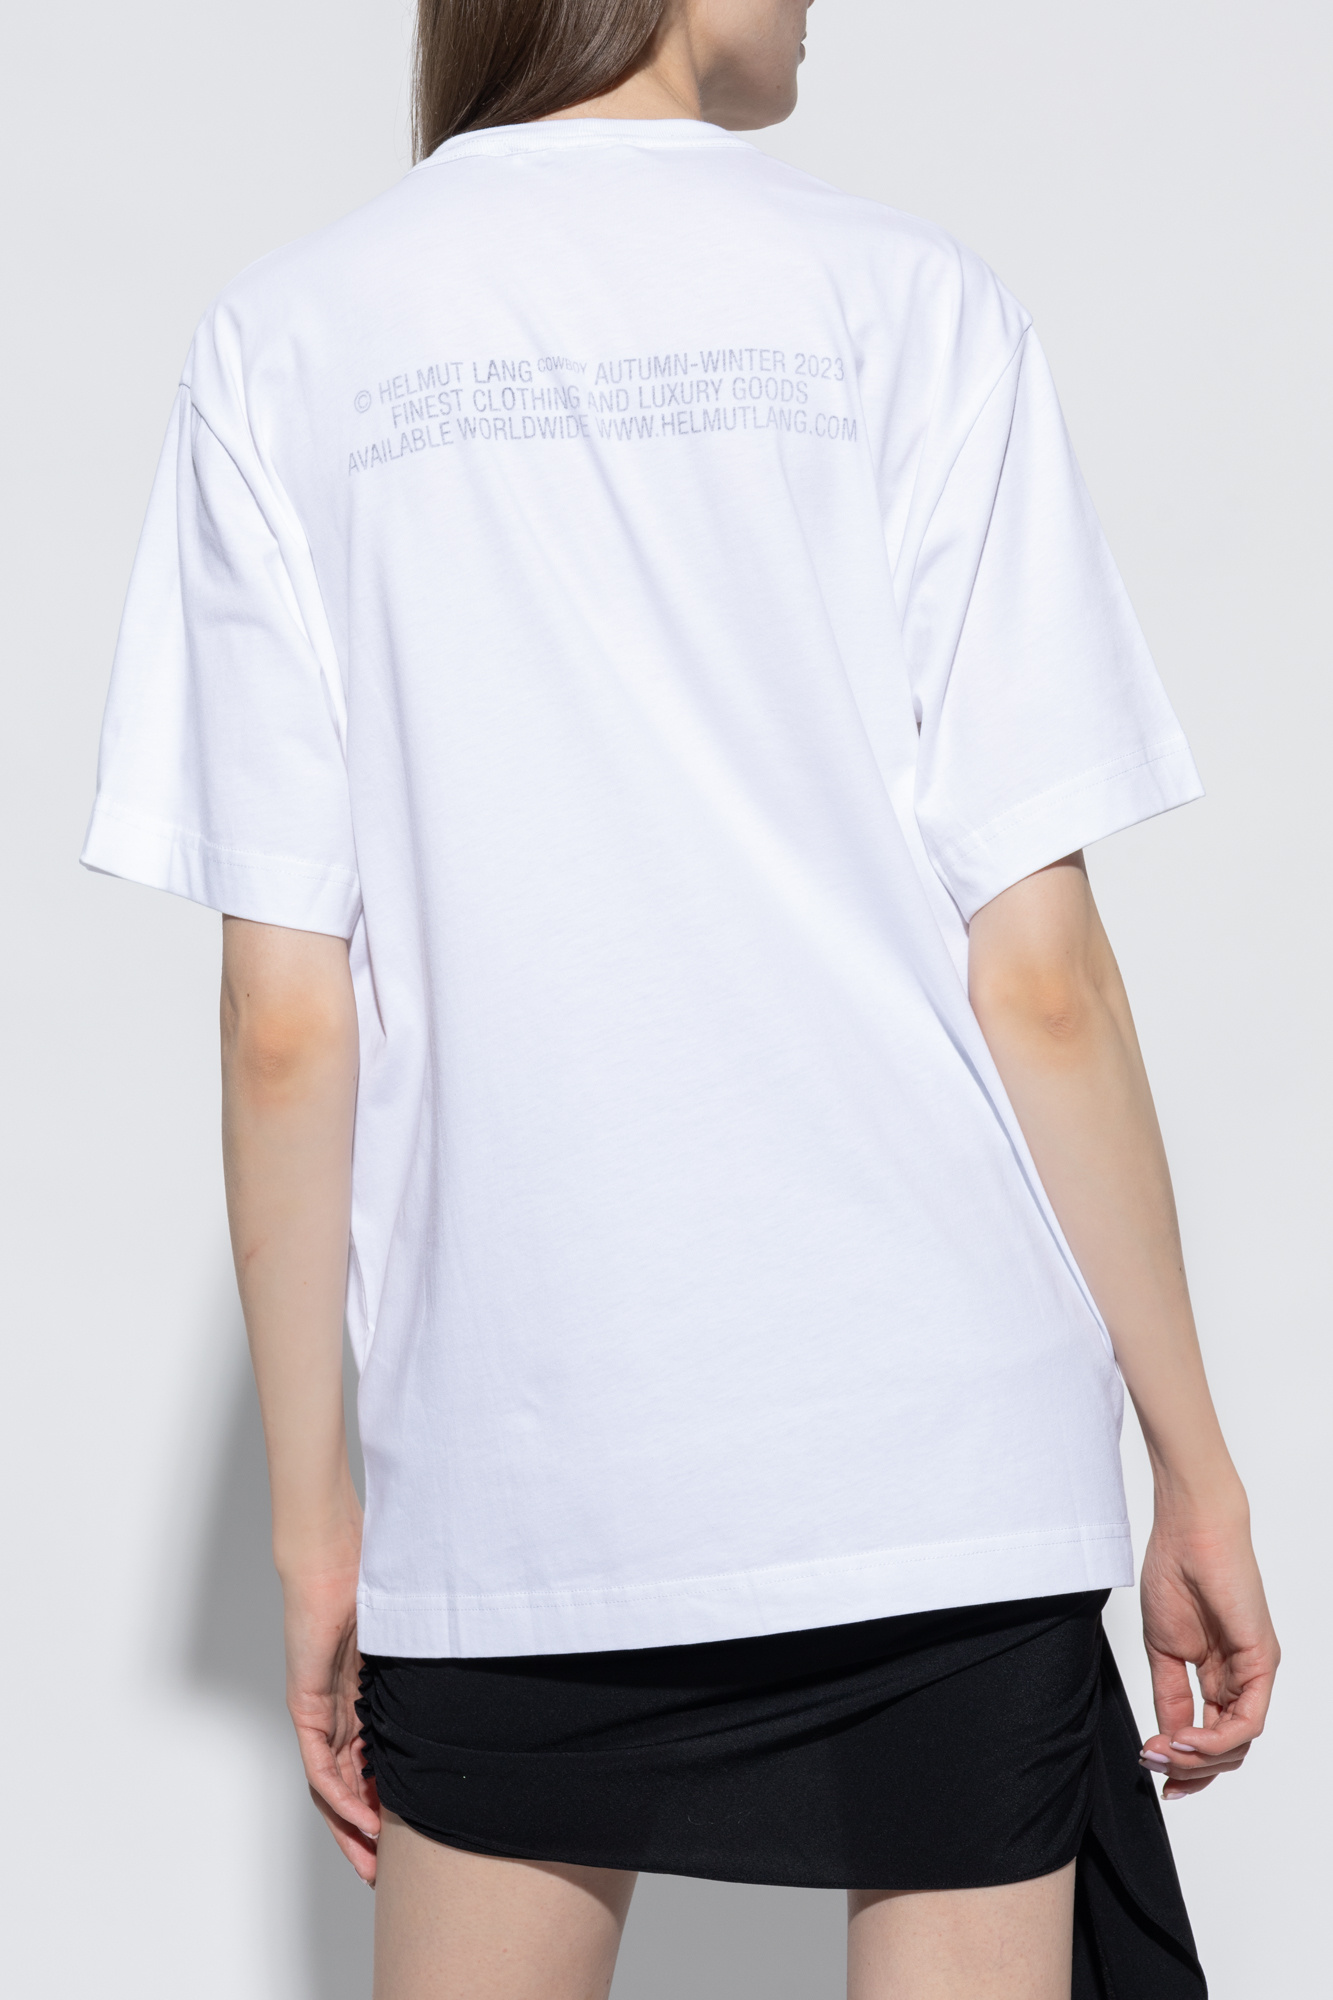 White T-shirt with logo Helmut Lang - Vitkac Canada